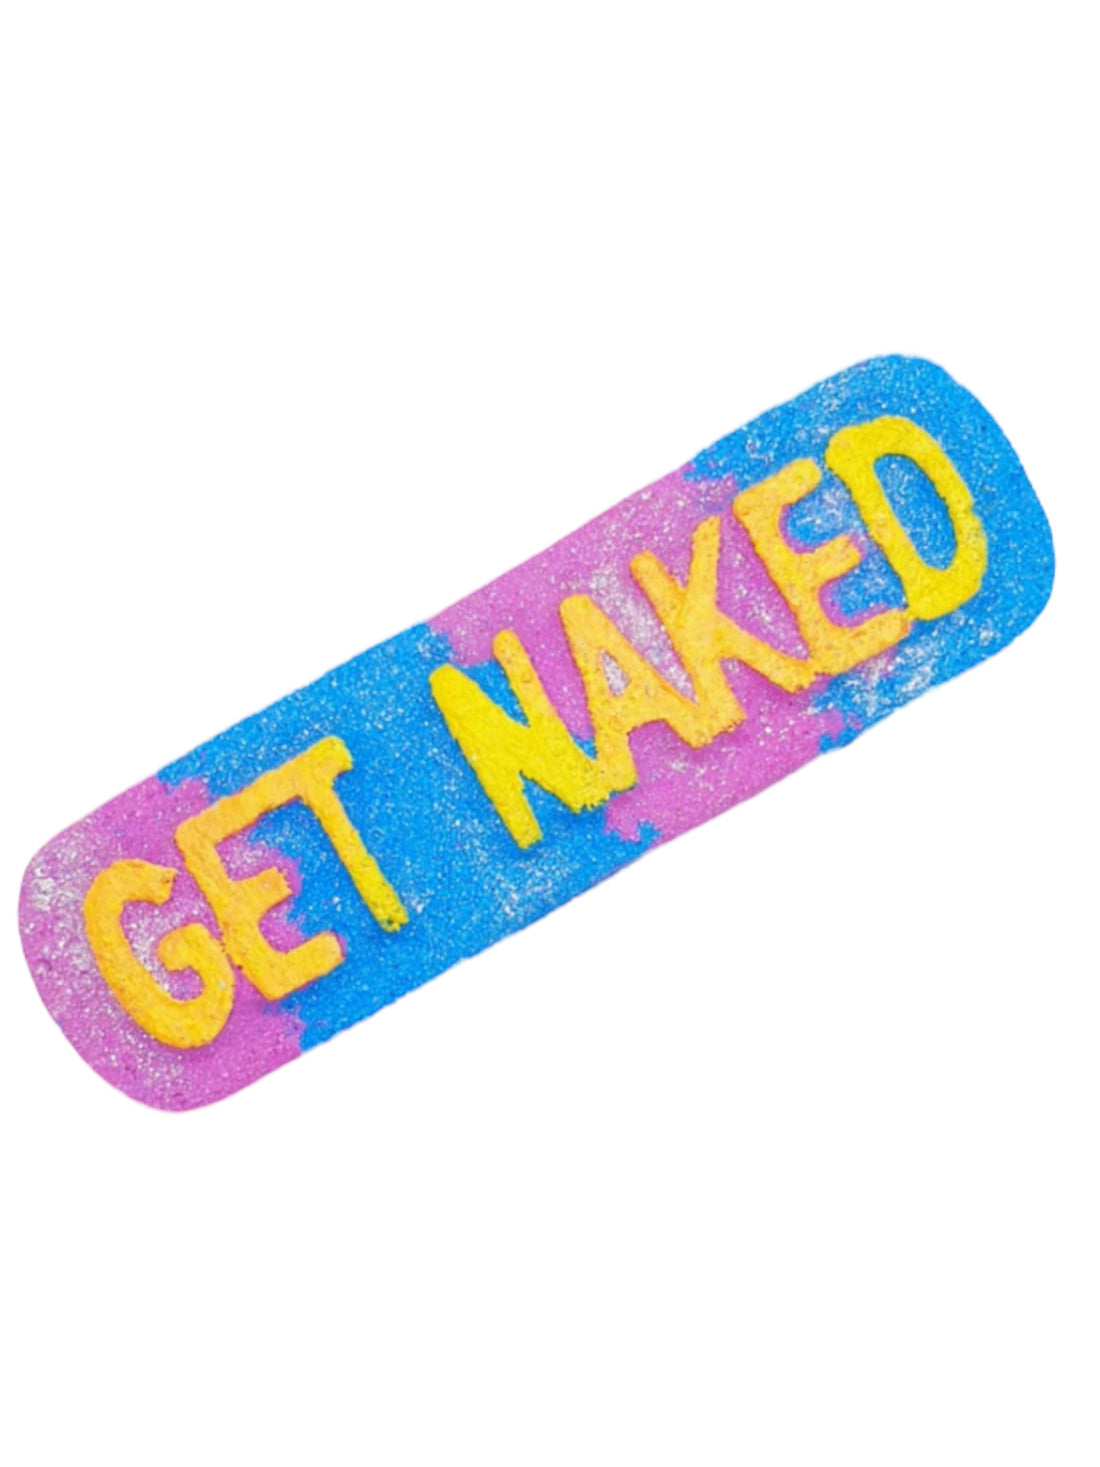 Get Naked Bath Bomb